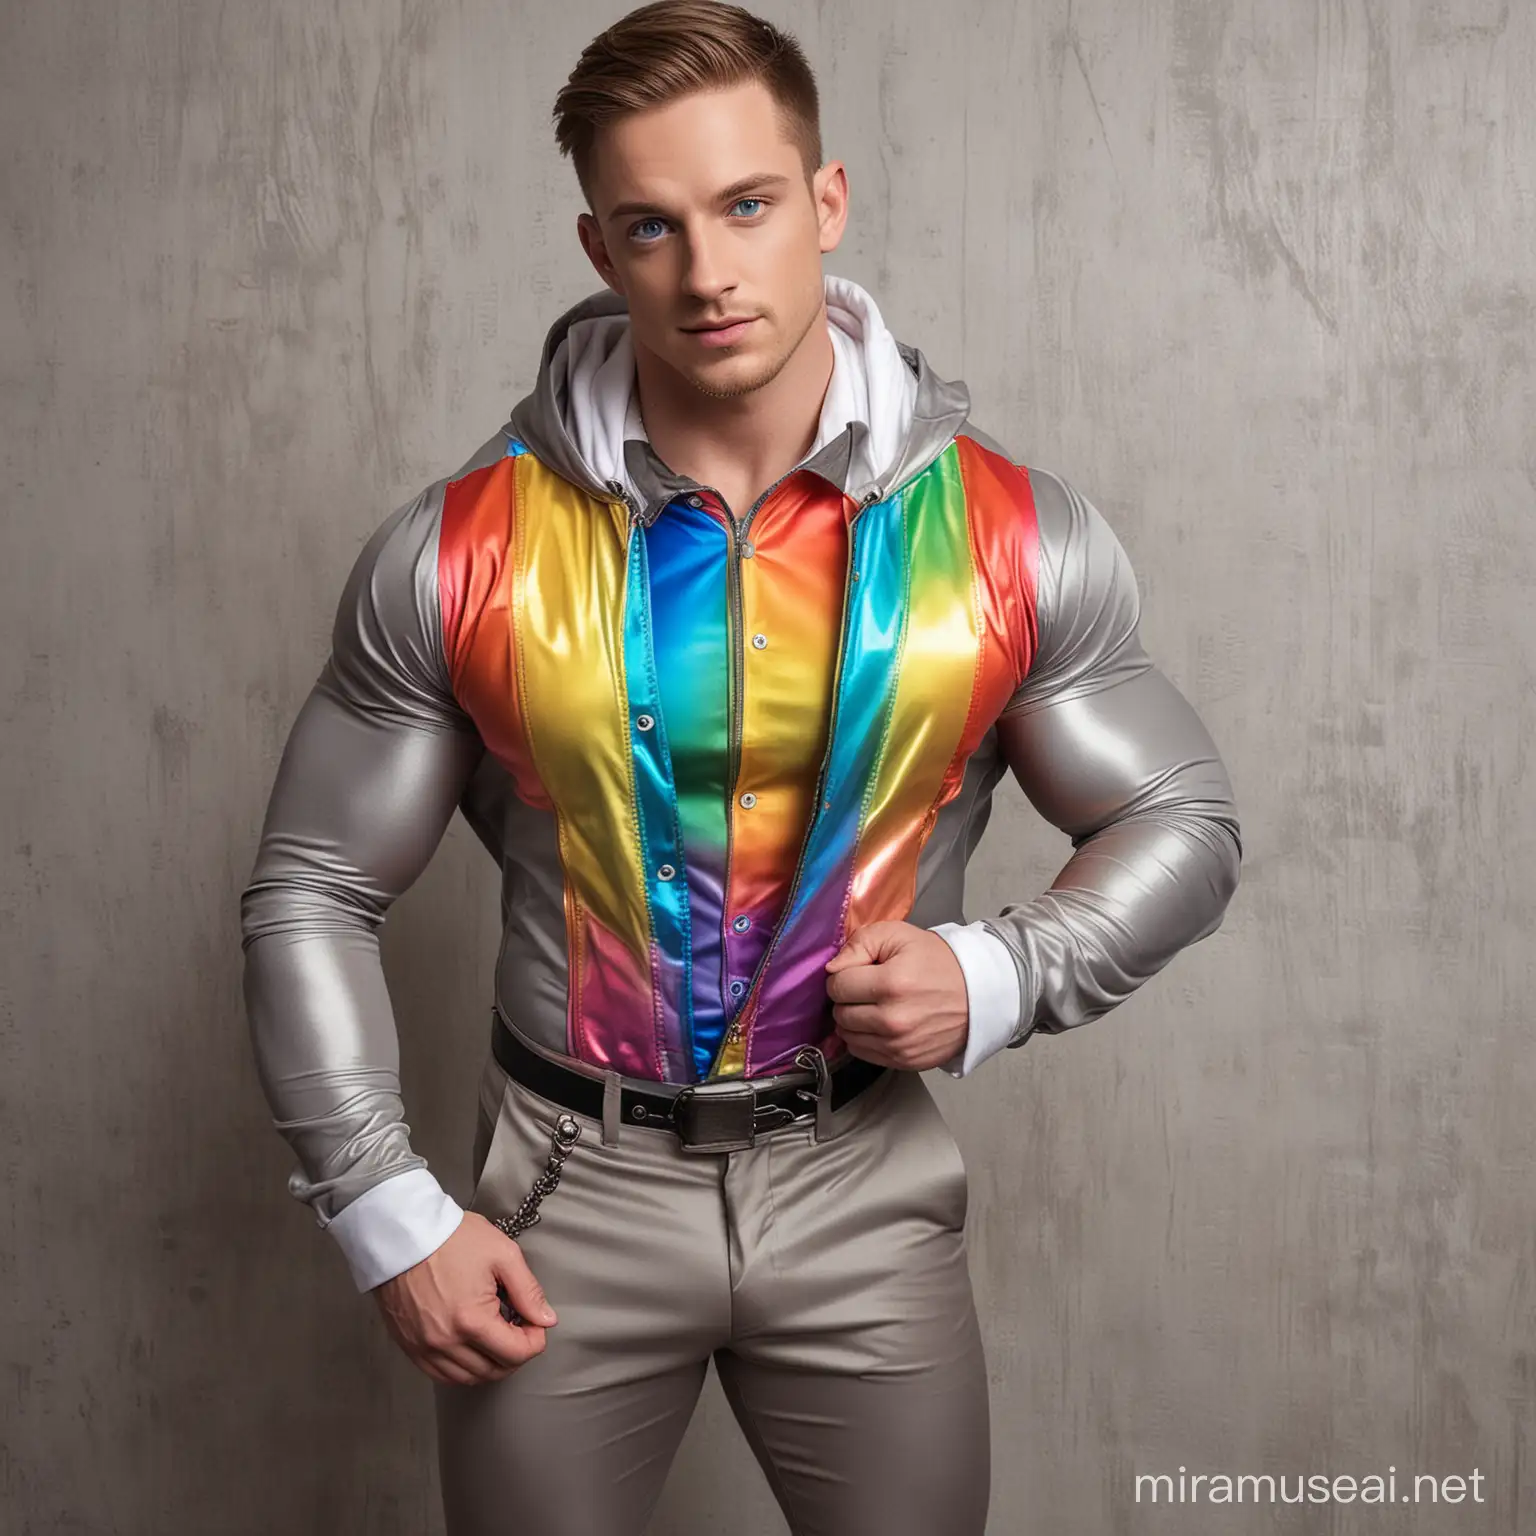 Muscular Male Bodybuilders in Rainbow Pride Steampunk Attire